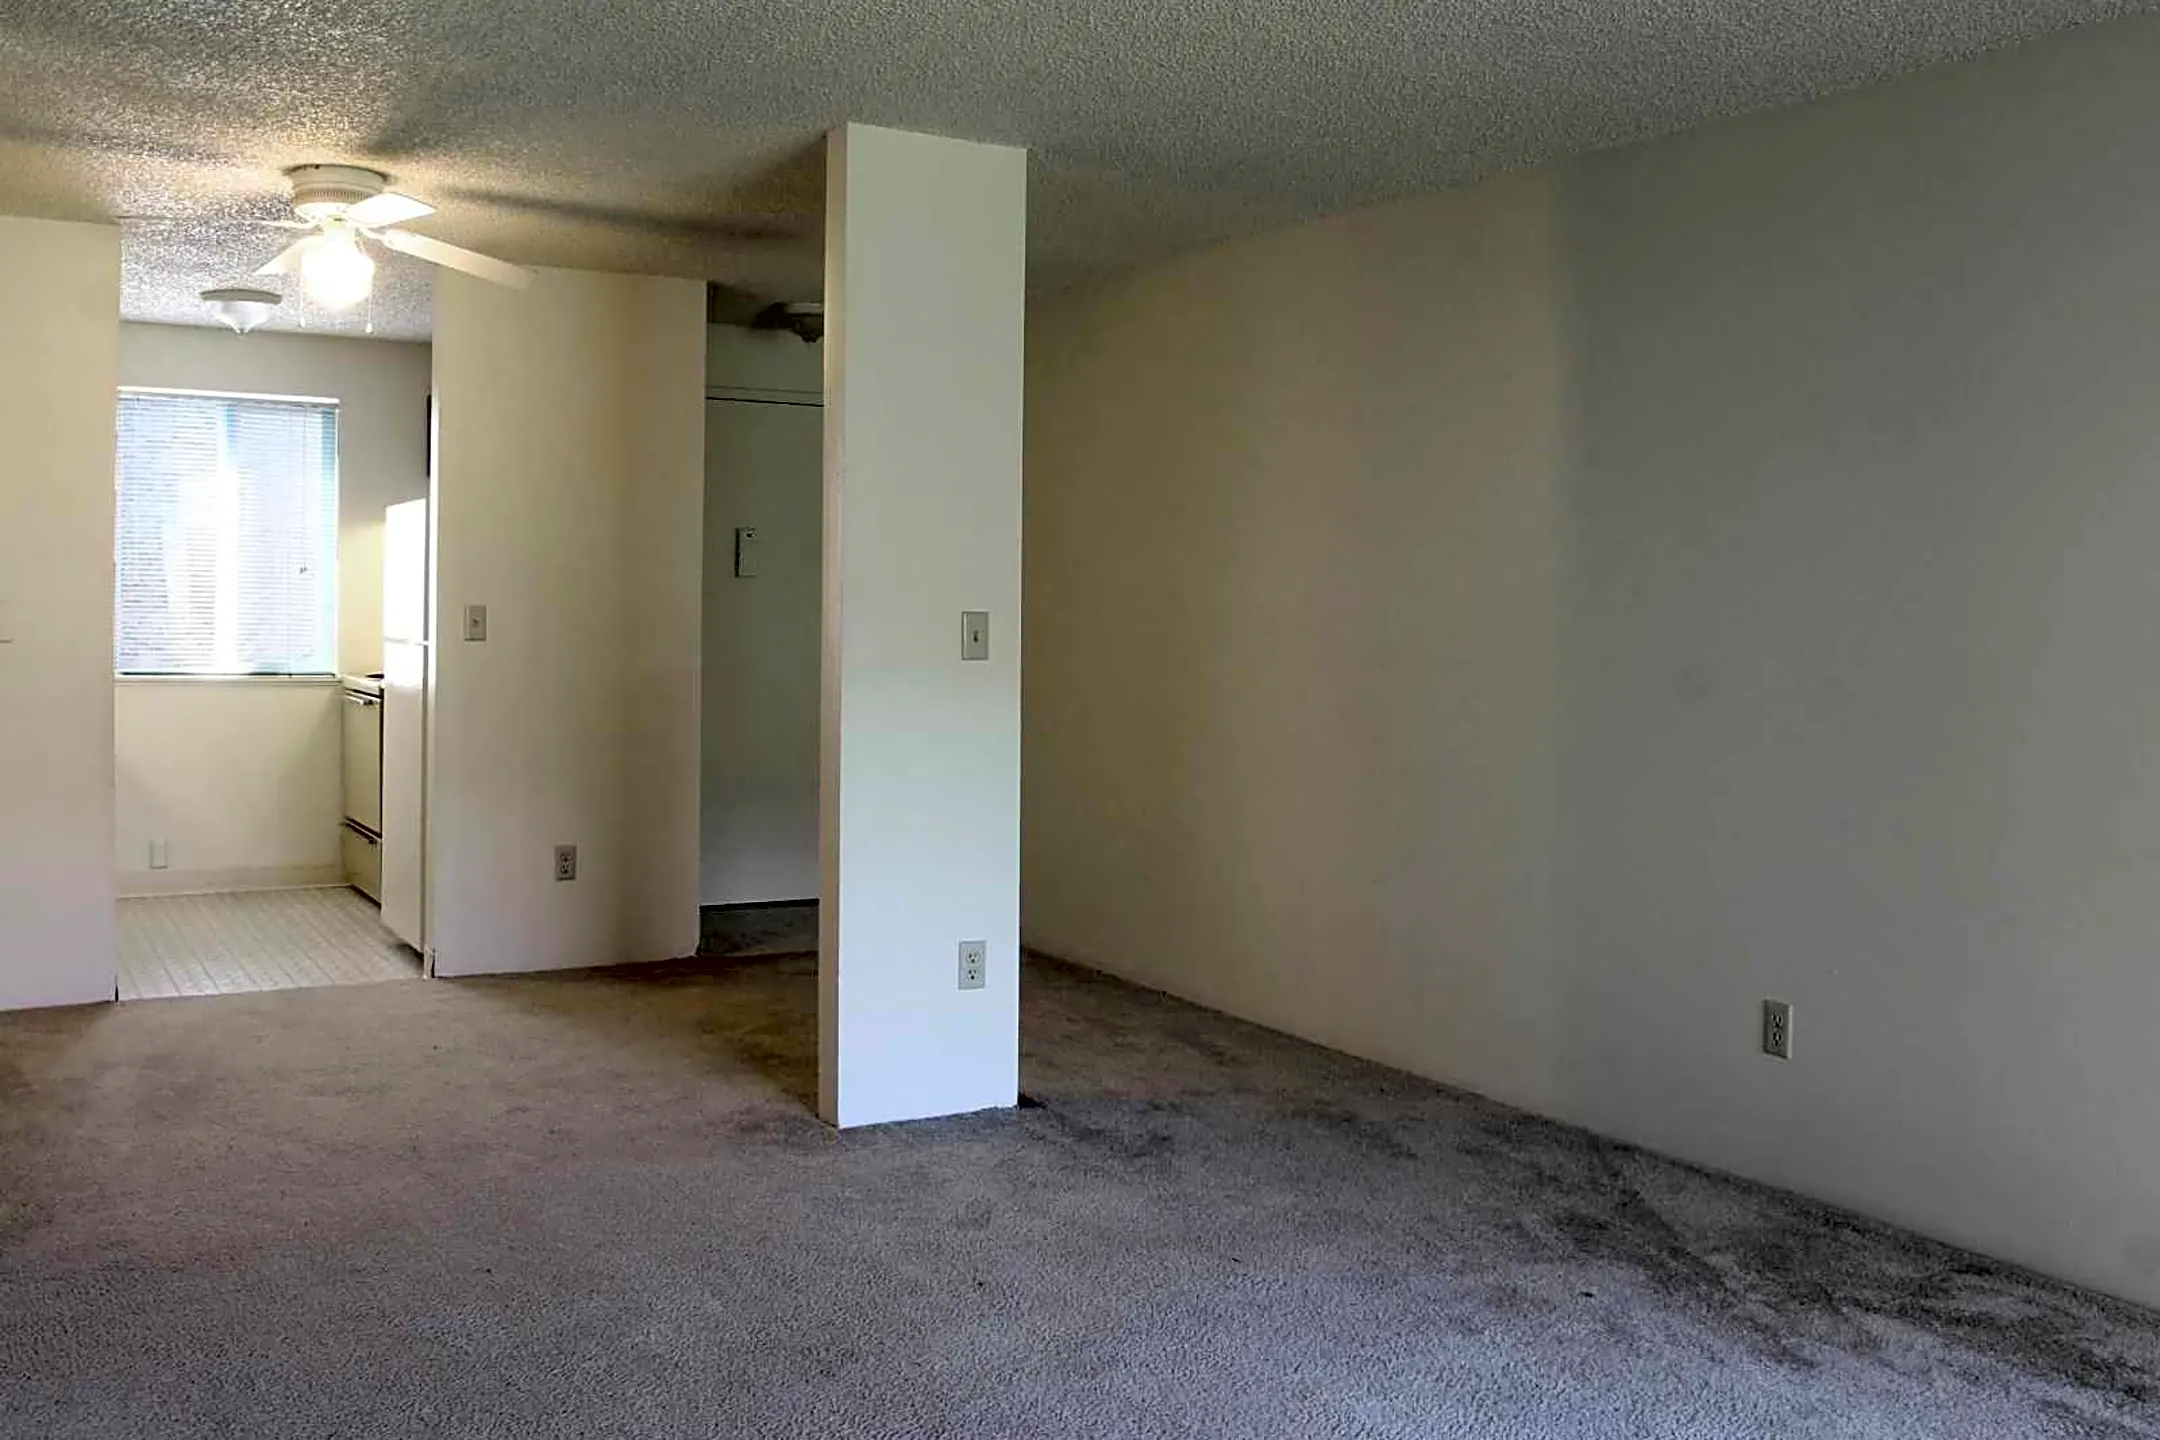 Living Room - Willamette Terrace Apartments - West Linn, OR